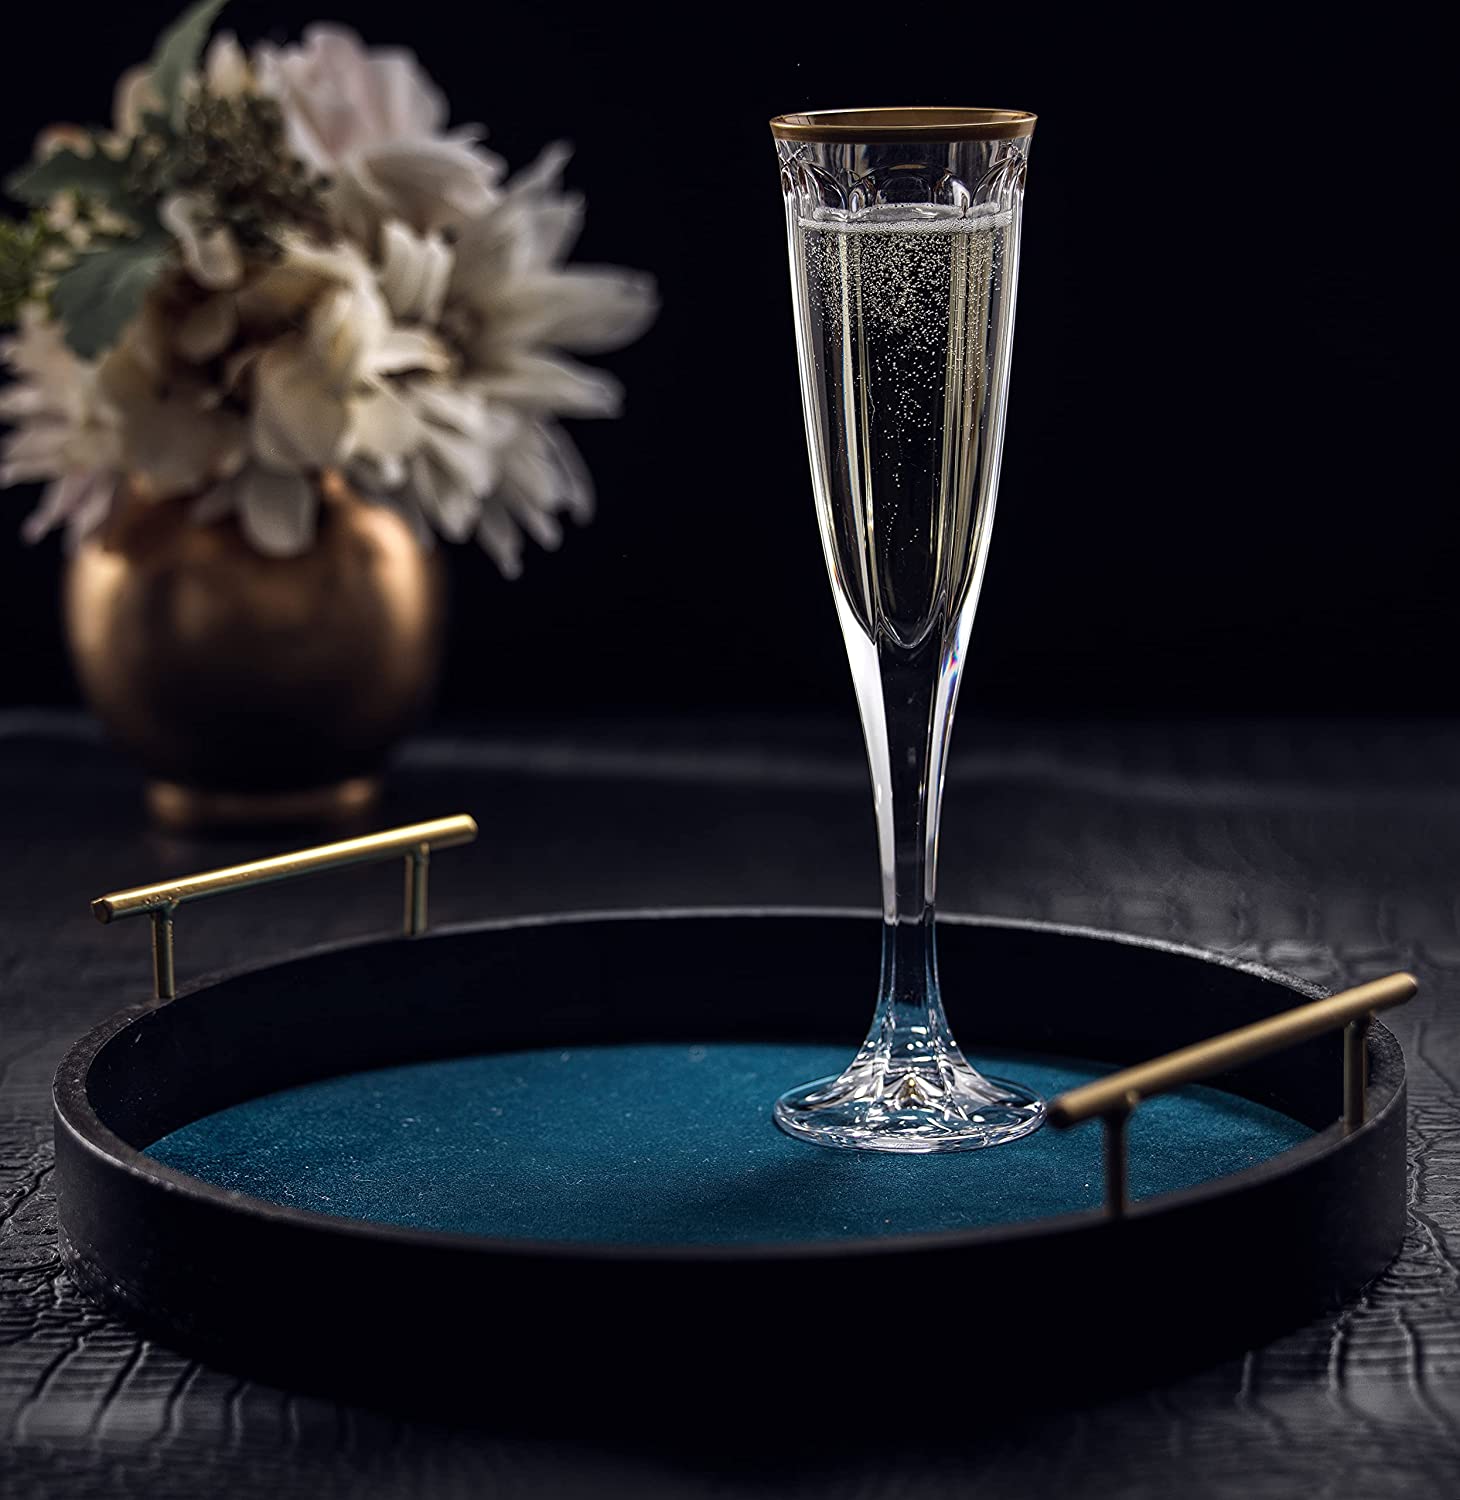 4.3 Ounces Gold Rim Champagne Flutes Glass Champagne Glasses Stemmed Wine Glass Set Fancy Glasses for Wedding